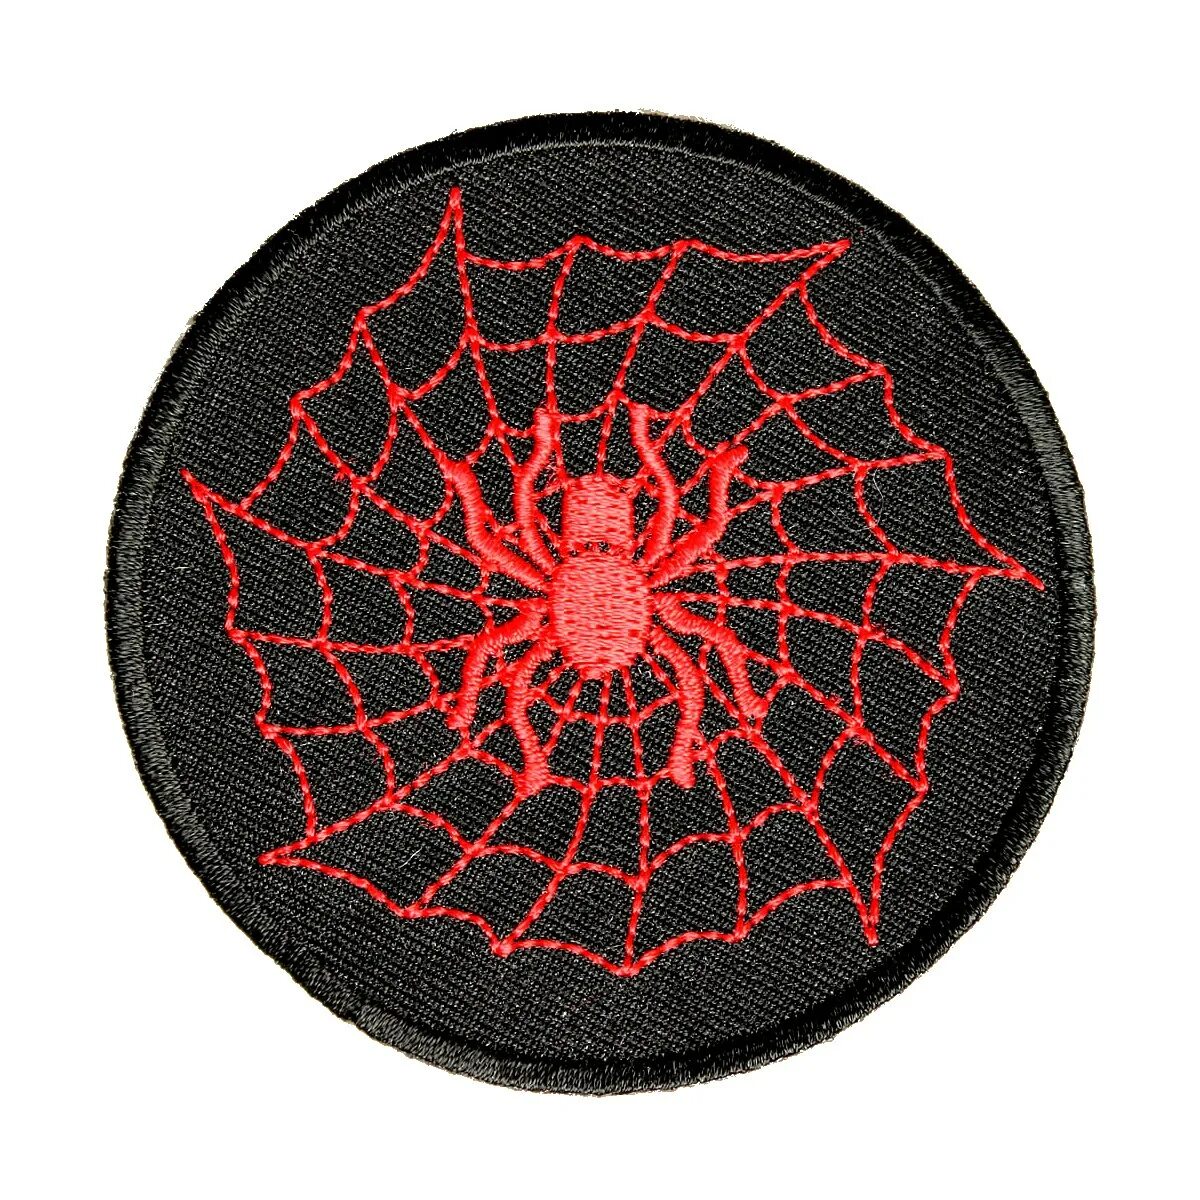 Нашивка паутина. Нашивка паучок. Вышивка паука с паутиной. Вышитая паутина.